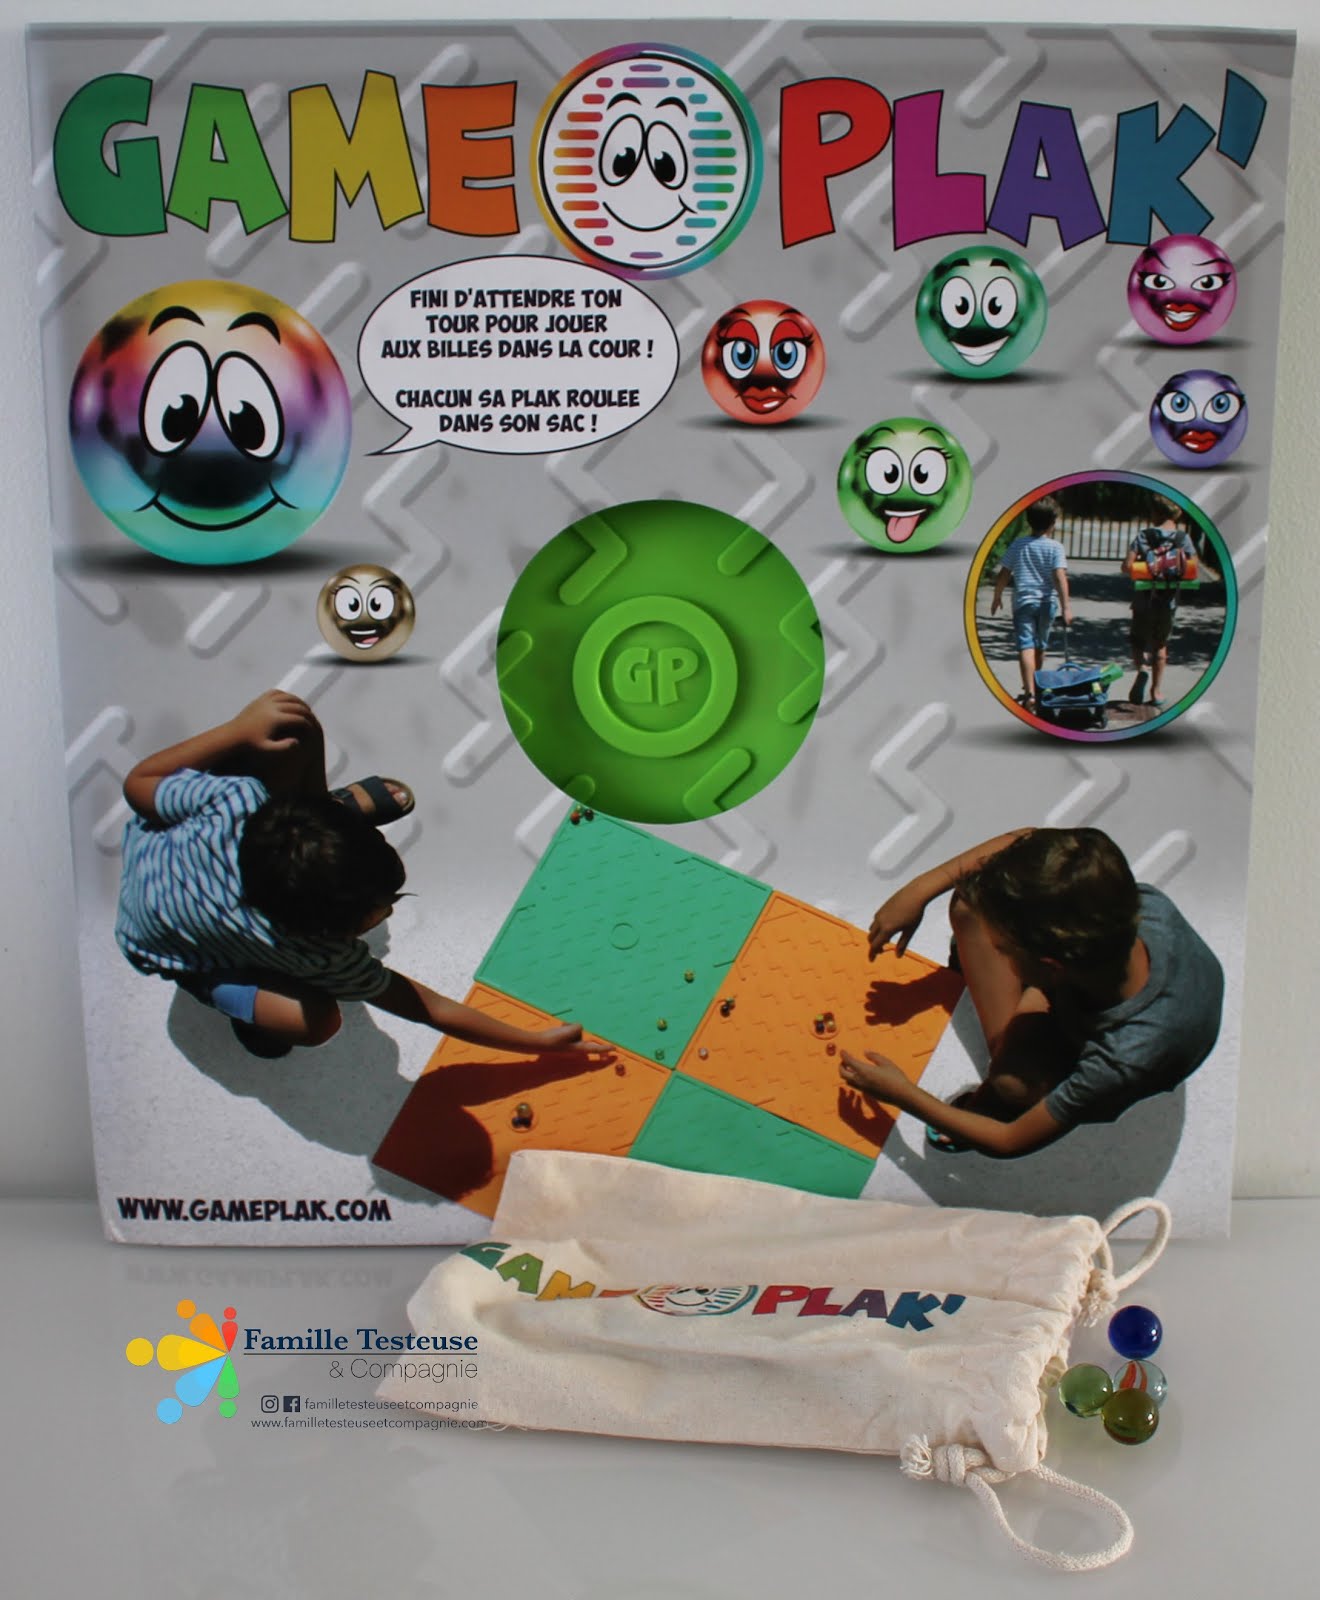 Famille testeuse et compagnie: Game Plak' - Edition Eclair Verte